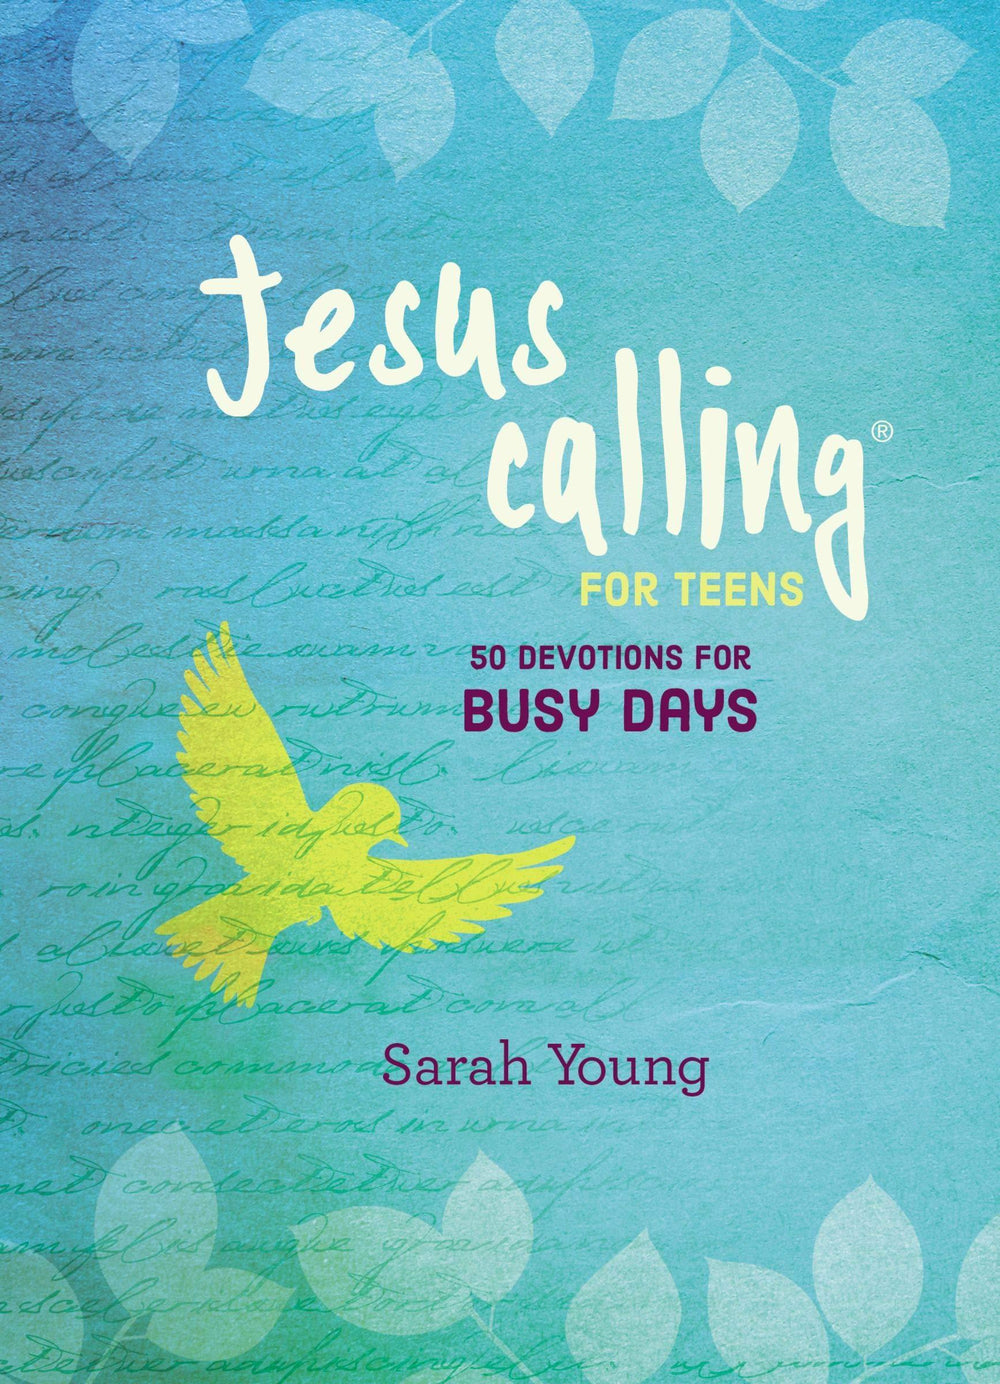 Jesus Calling: 50 Devotions for Busy Days - Sarah Young - Pura Vida Books